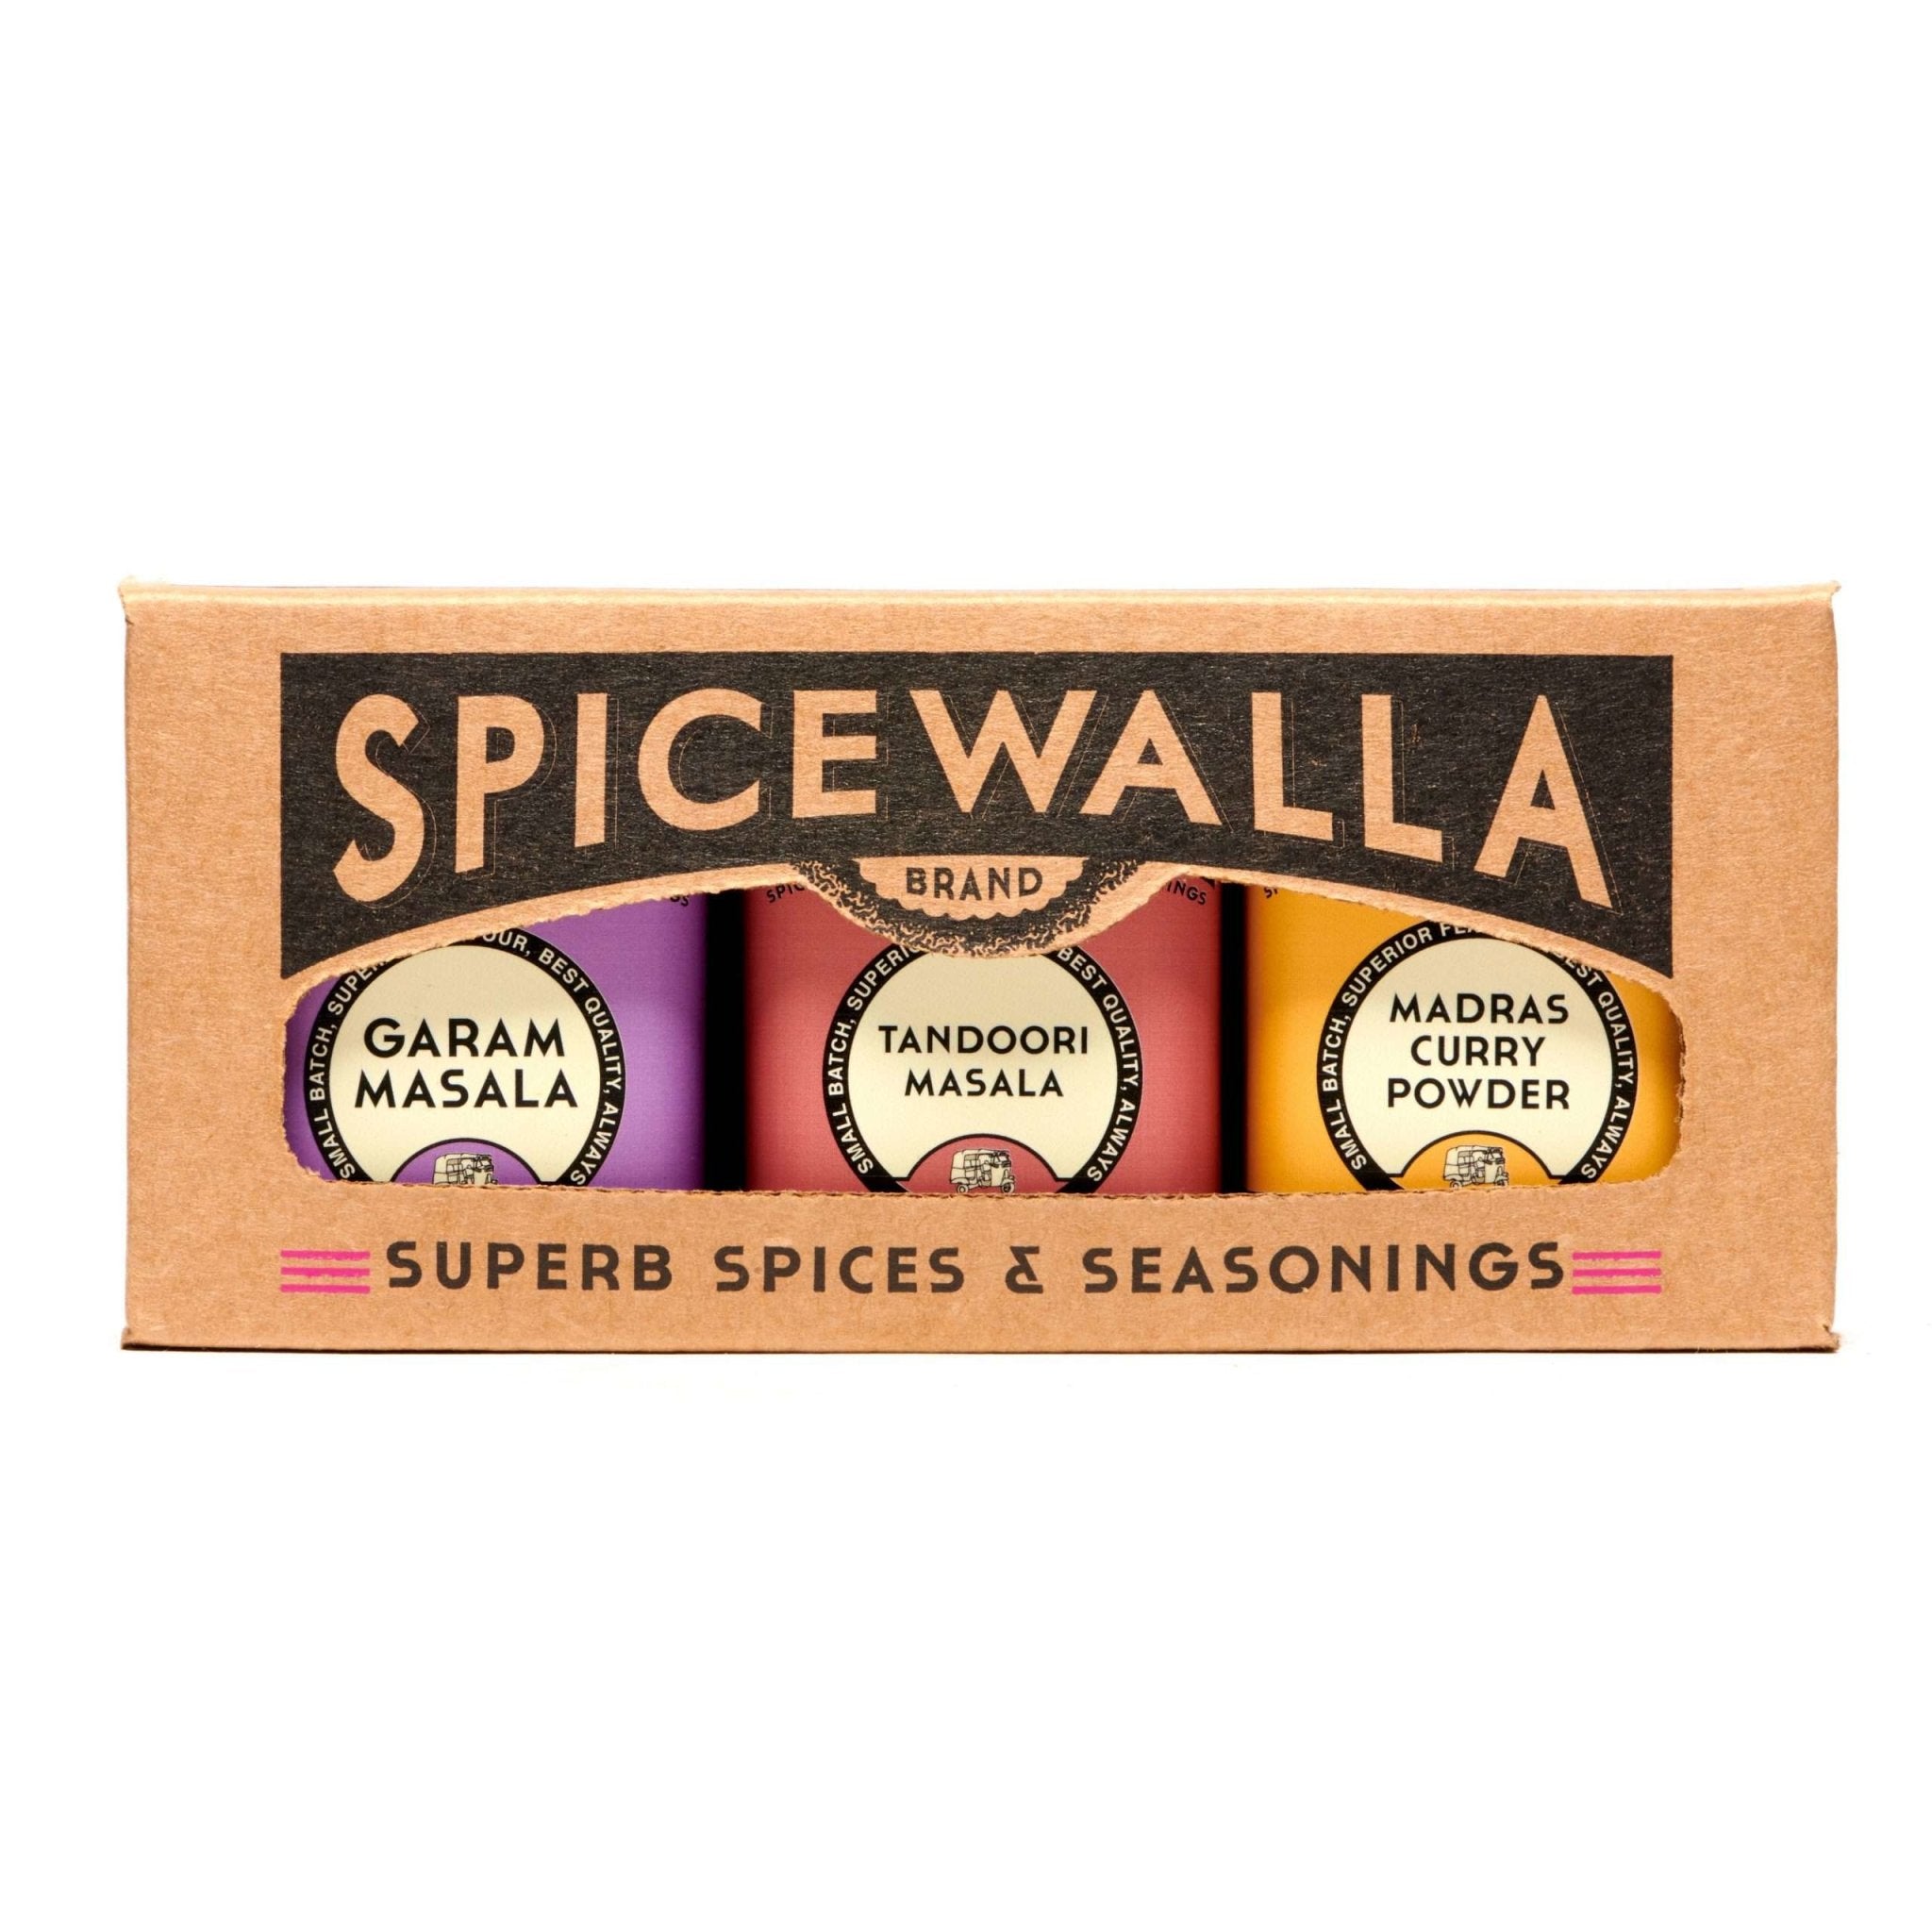 The Masala collection from Spicewalla contains 3 spices: Garam Masala, Tandoori Masala and Madras Curry Powder in small tins.